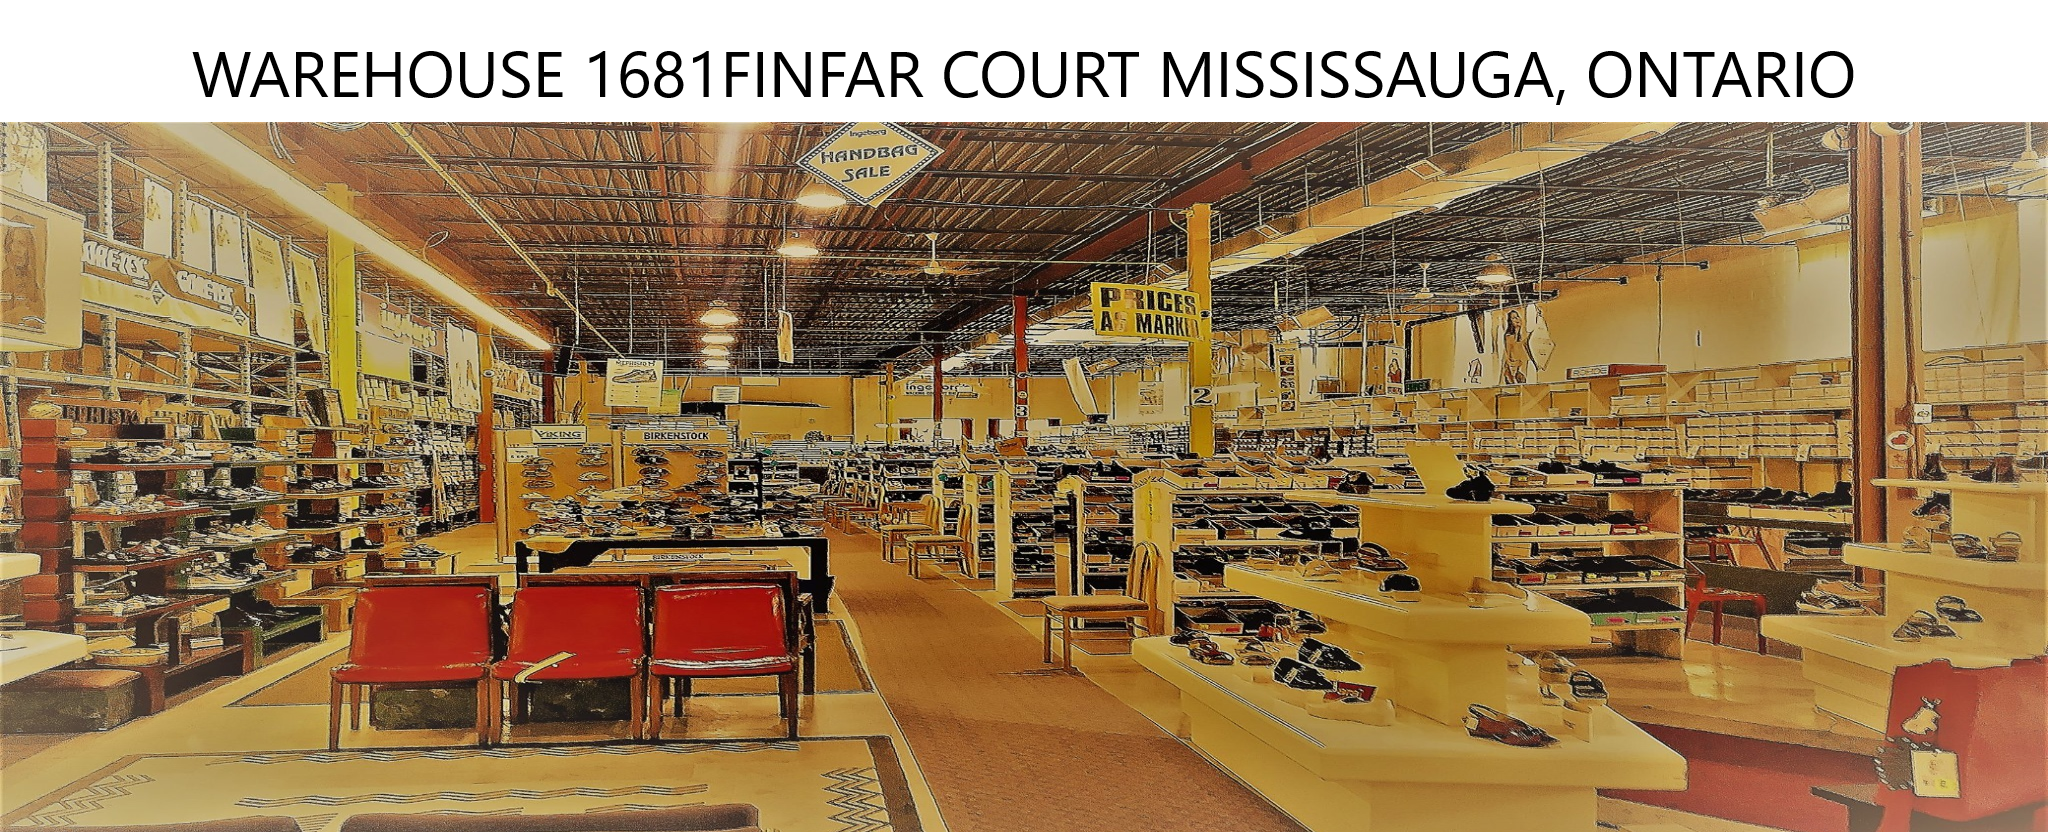 ingeborg's Warehouse
1681 Finfar Court
Mississauga, Ontario
905 823-7415